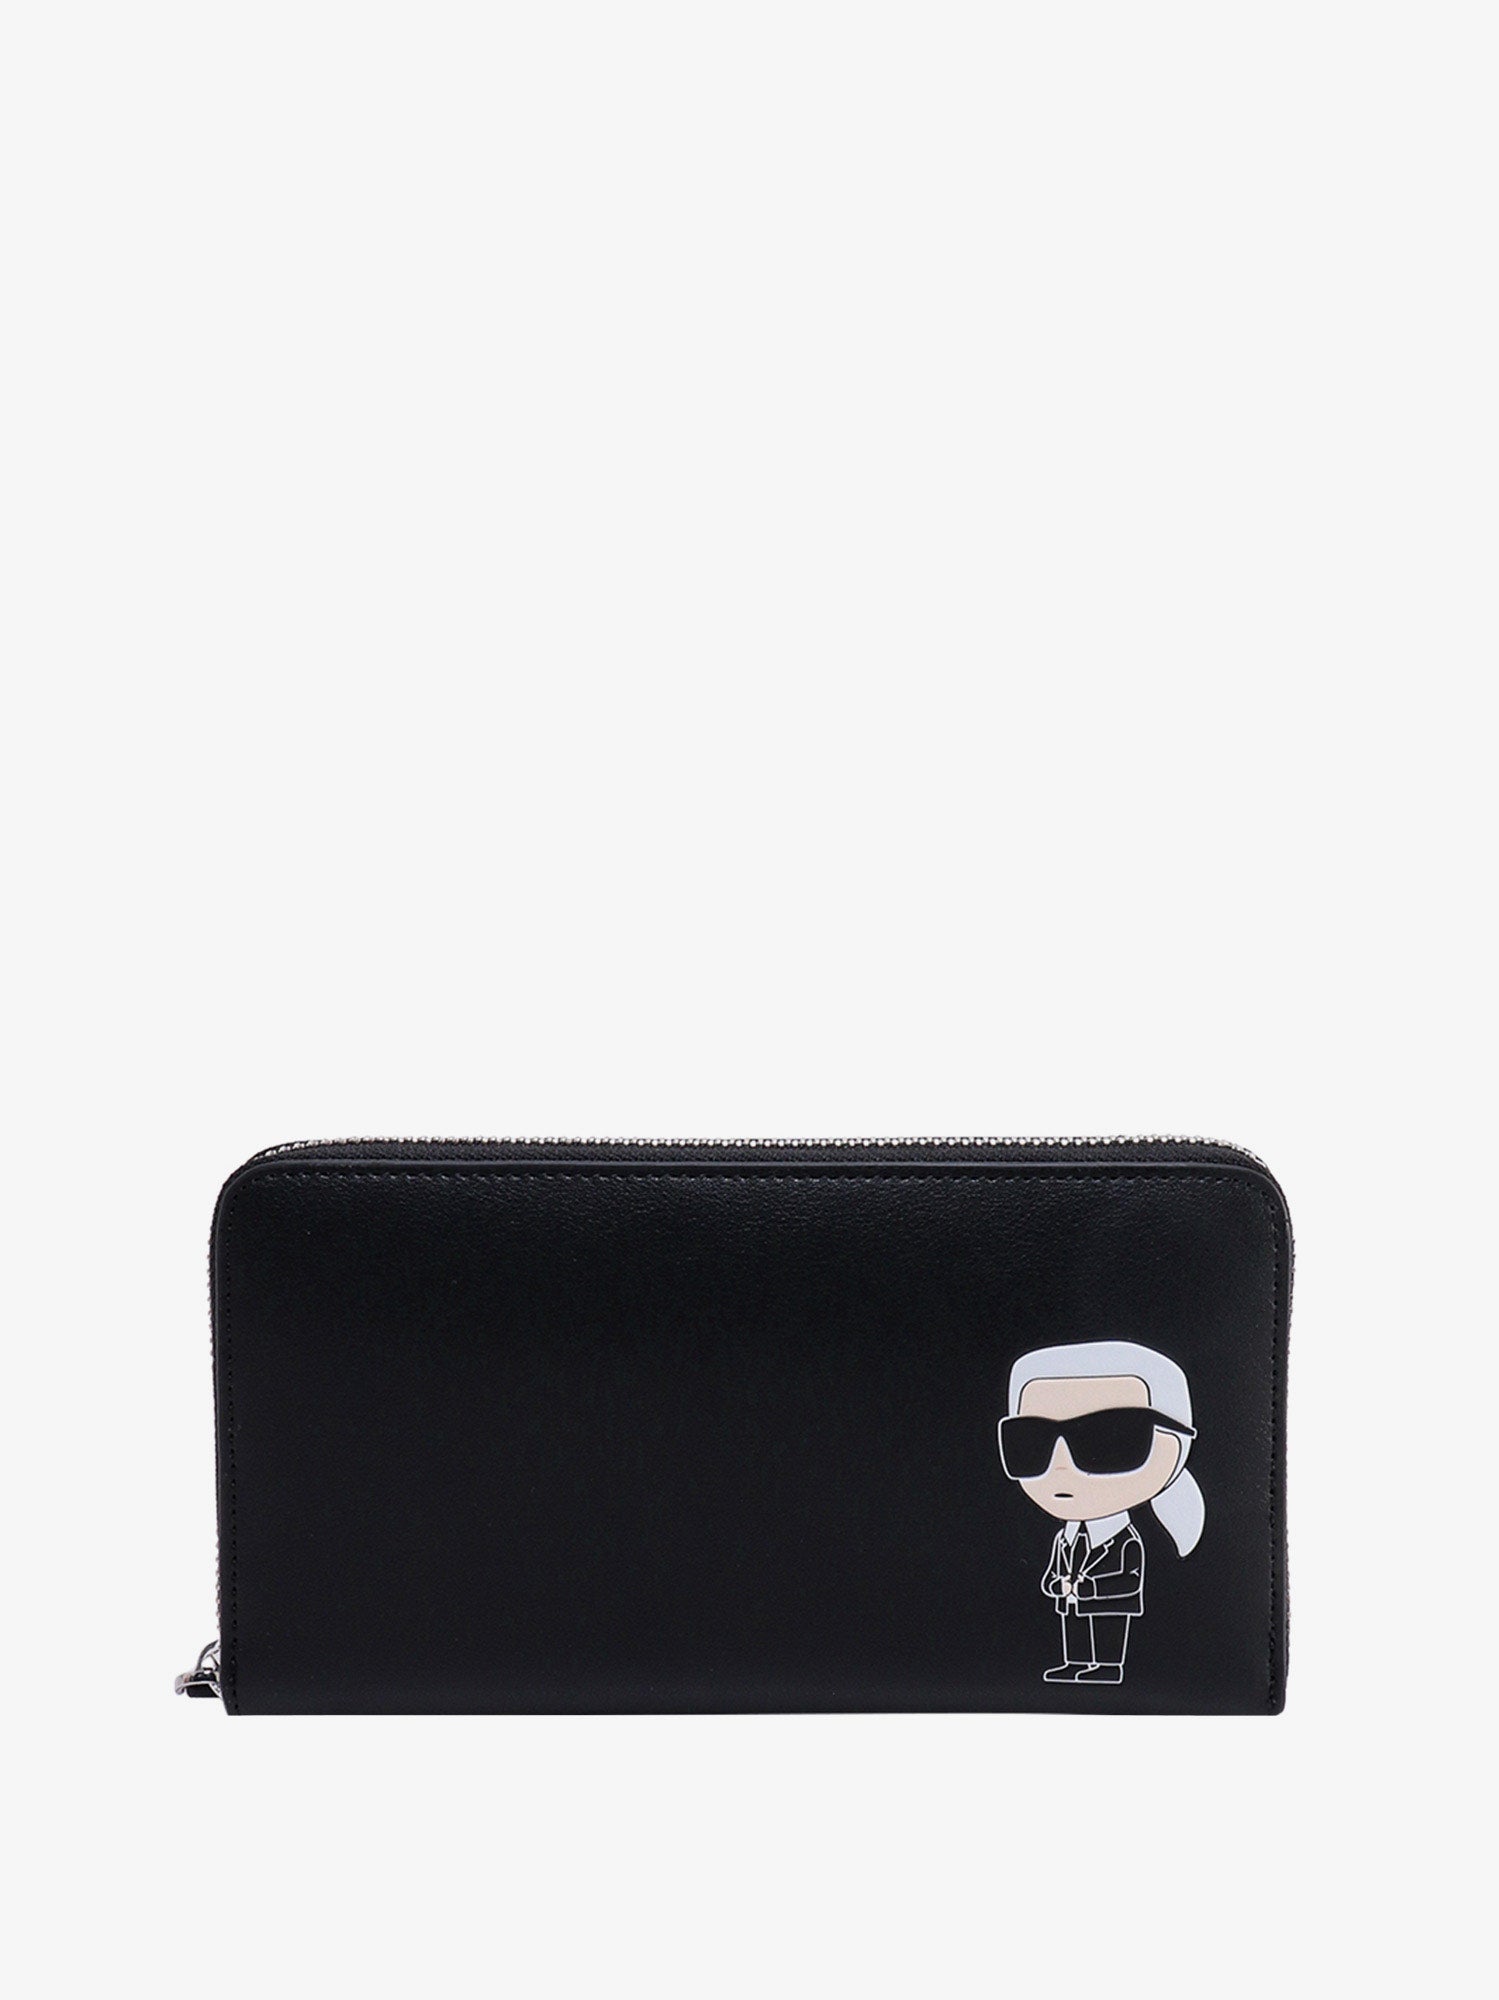 Karl Lagerfeld Wallet In Black